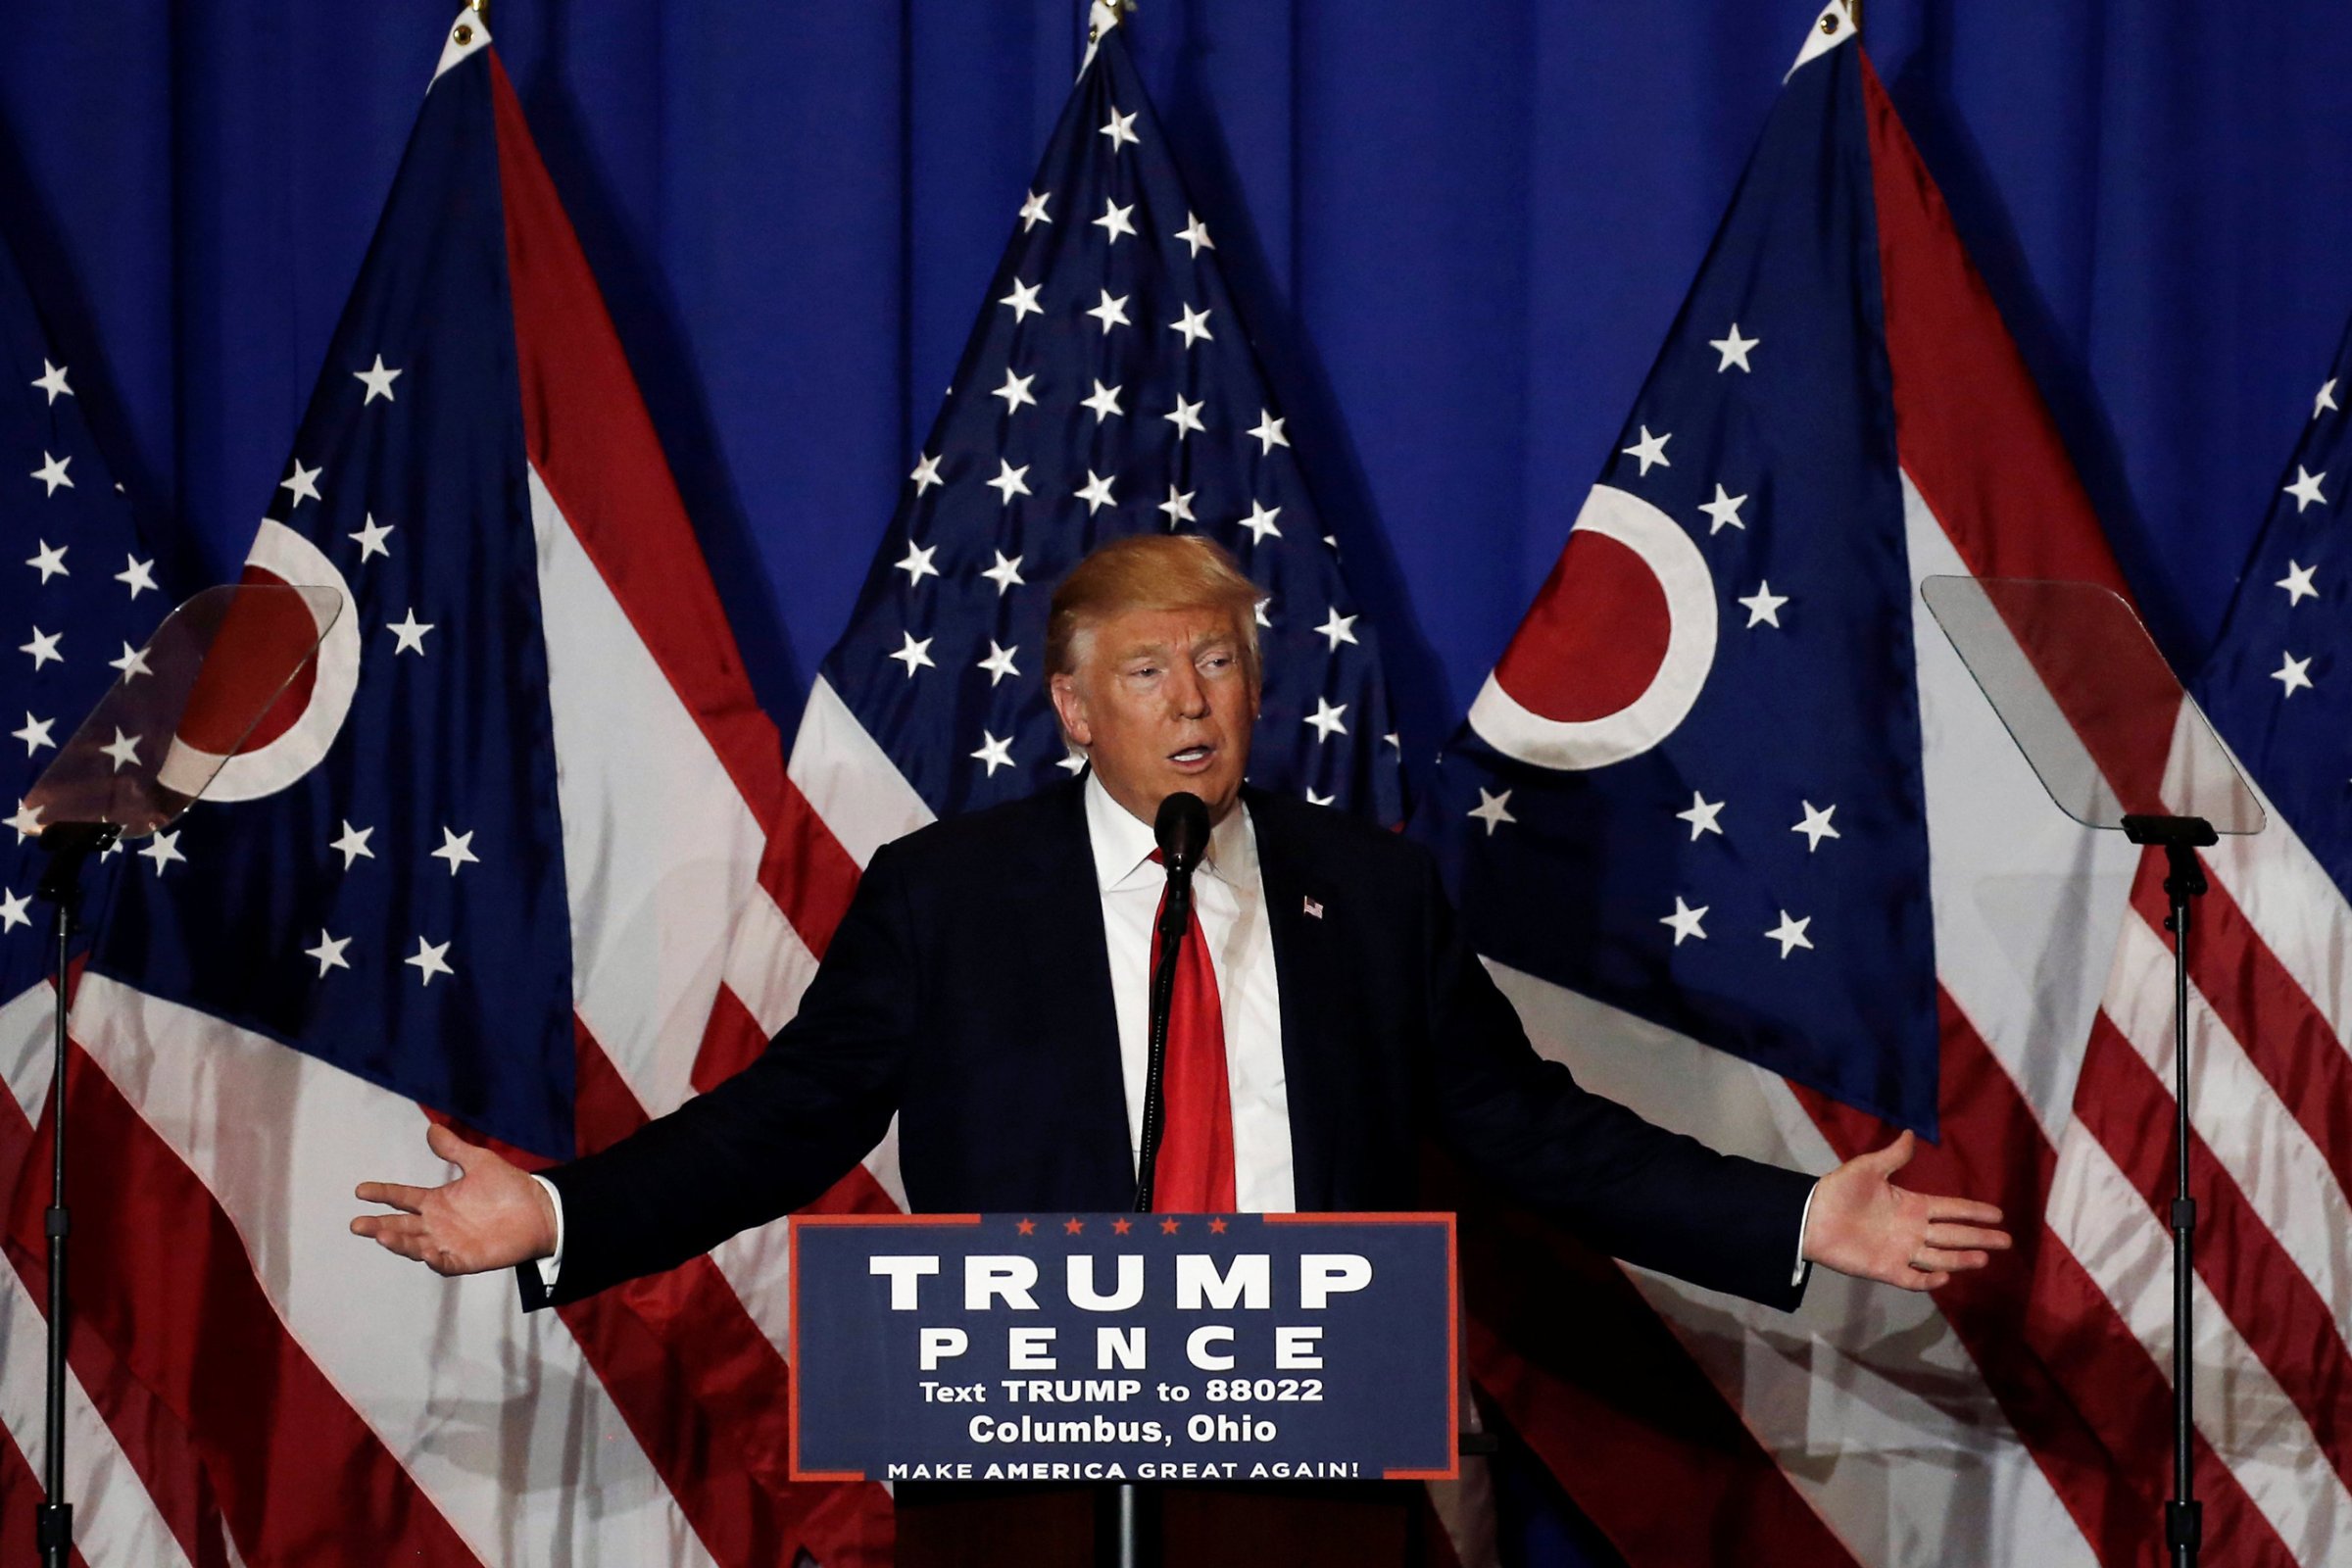 U.S. Republican presidential nominee Donald Trump speaks at a campaign event in Columbus, Ohio, U.S., October 13, 2016. REUTERS/Mike Segar